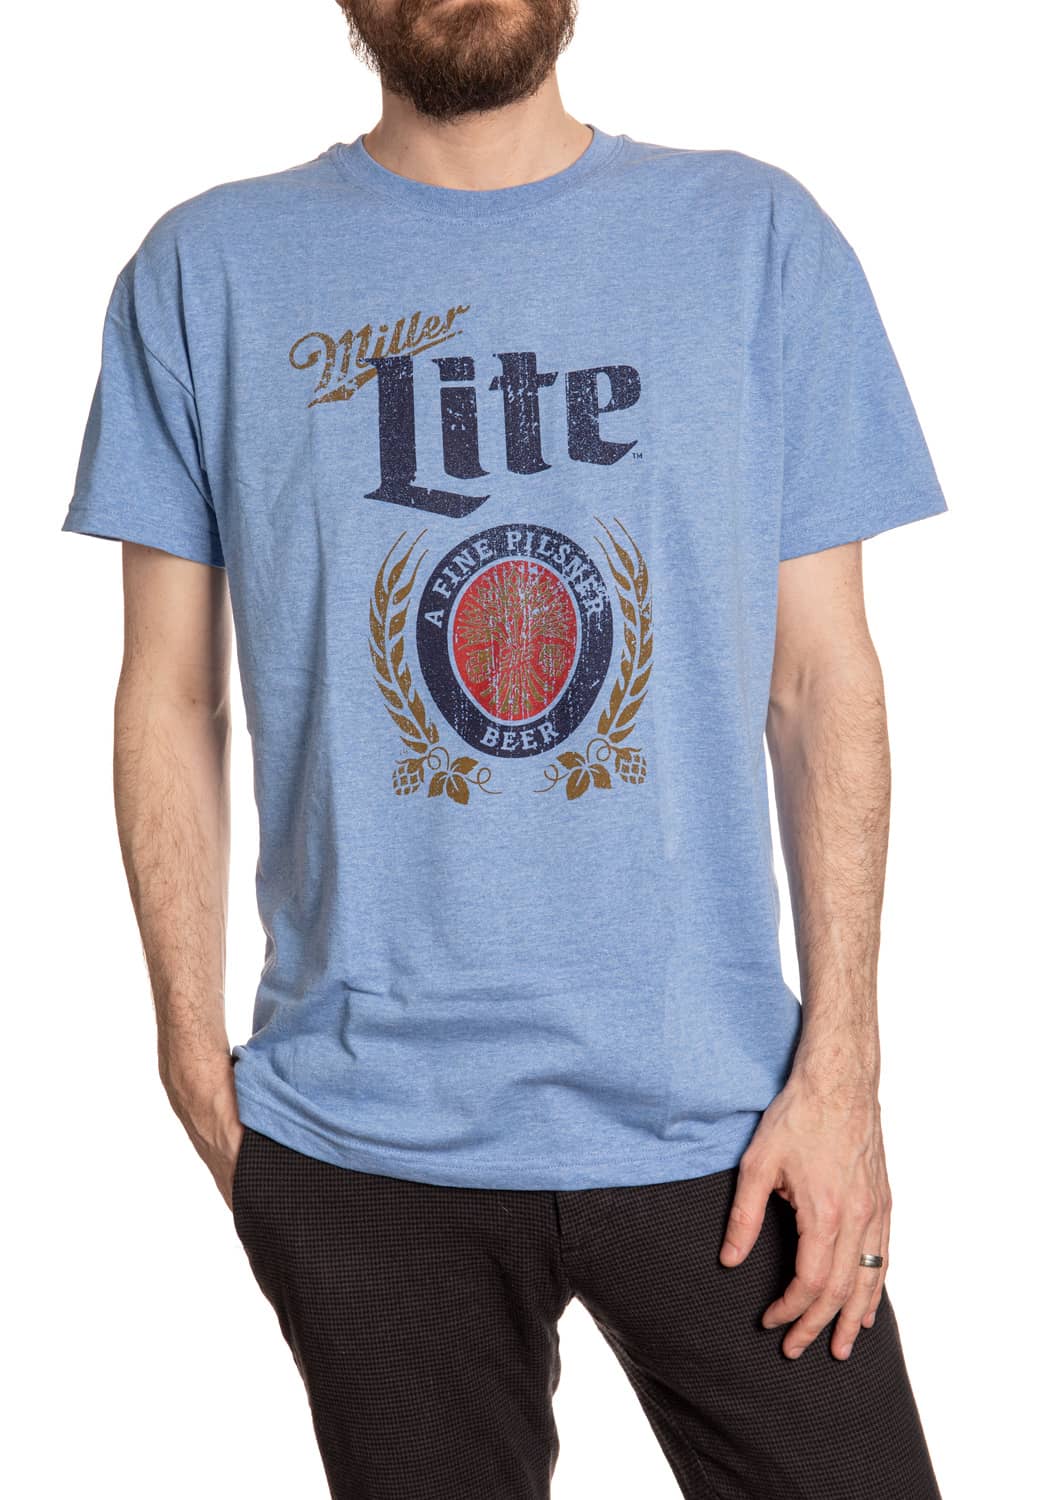 Miller Lite Classic Logo T-Shirt on Carolina Blue, Front View.